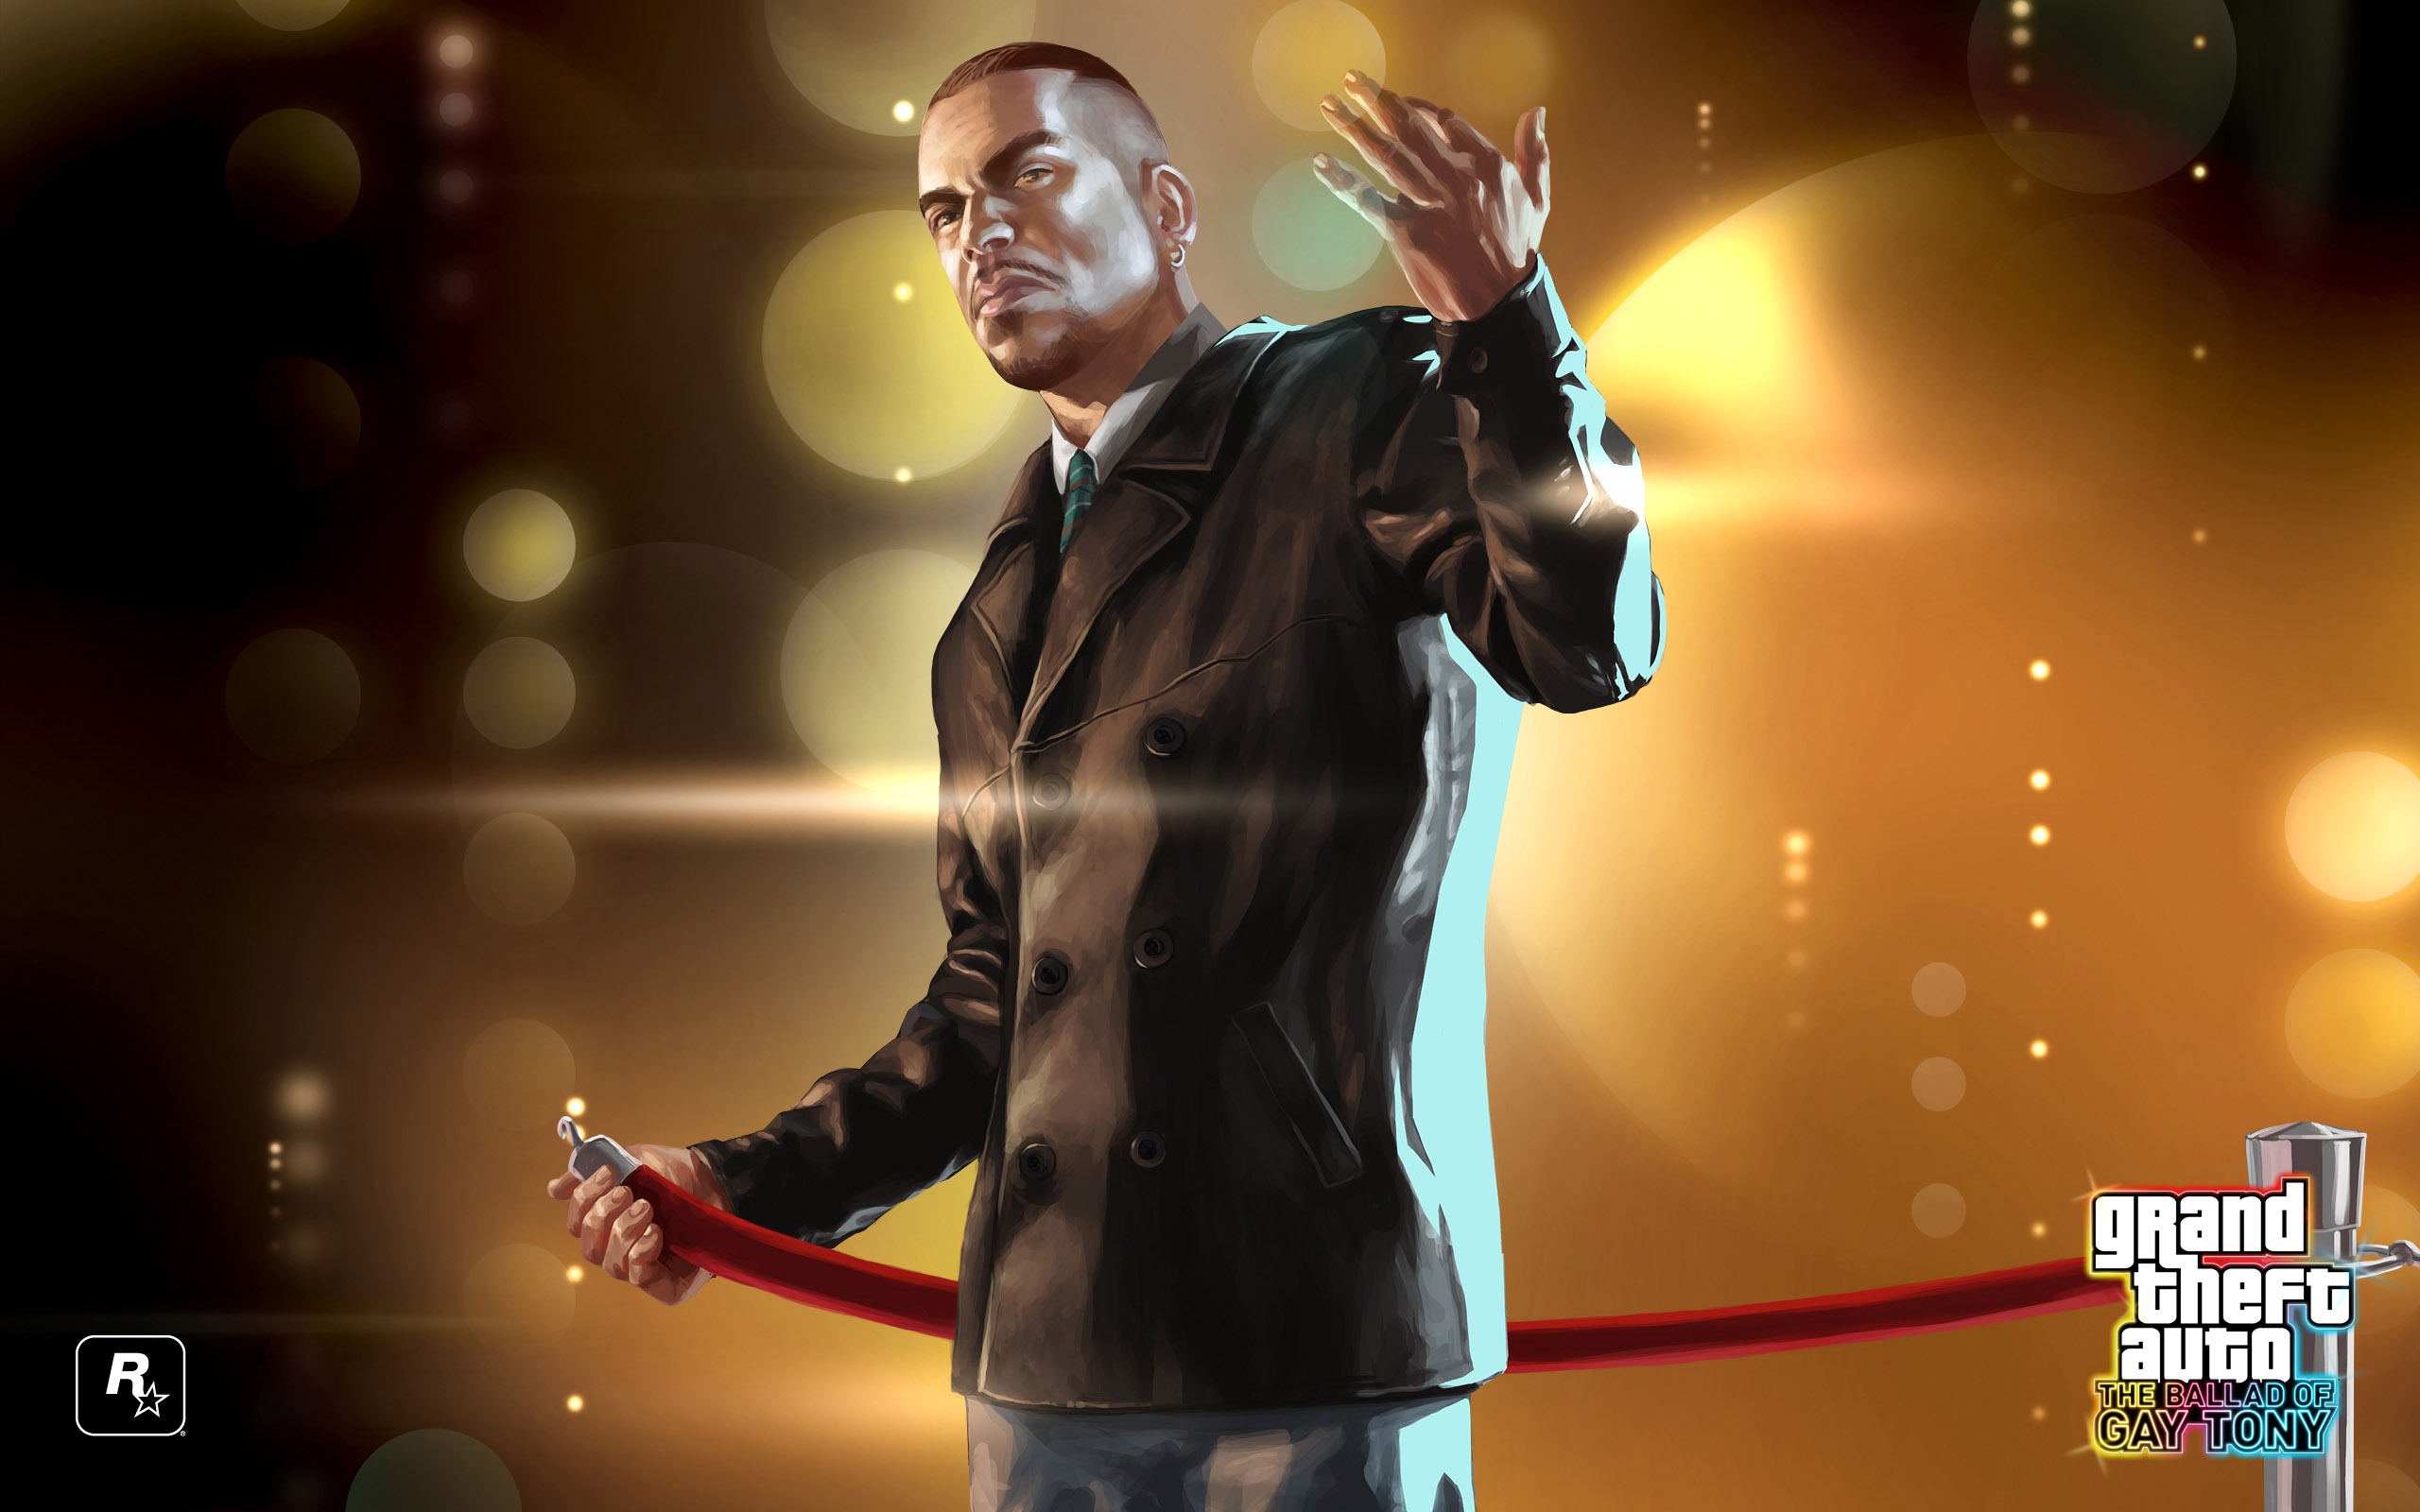 Grand Theft Auto: Vice City fondos de escritorio de alta definición #22 - 2560x1600